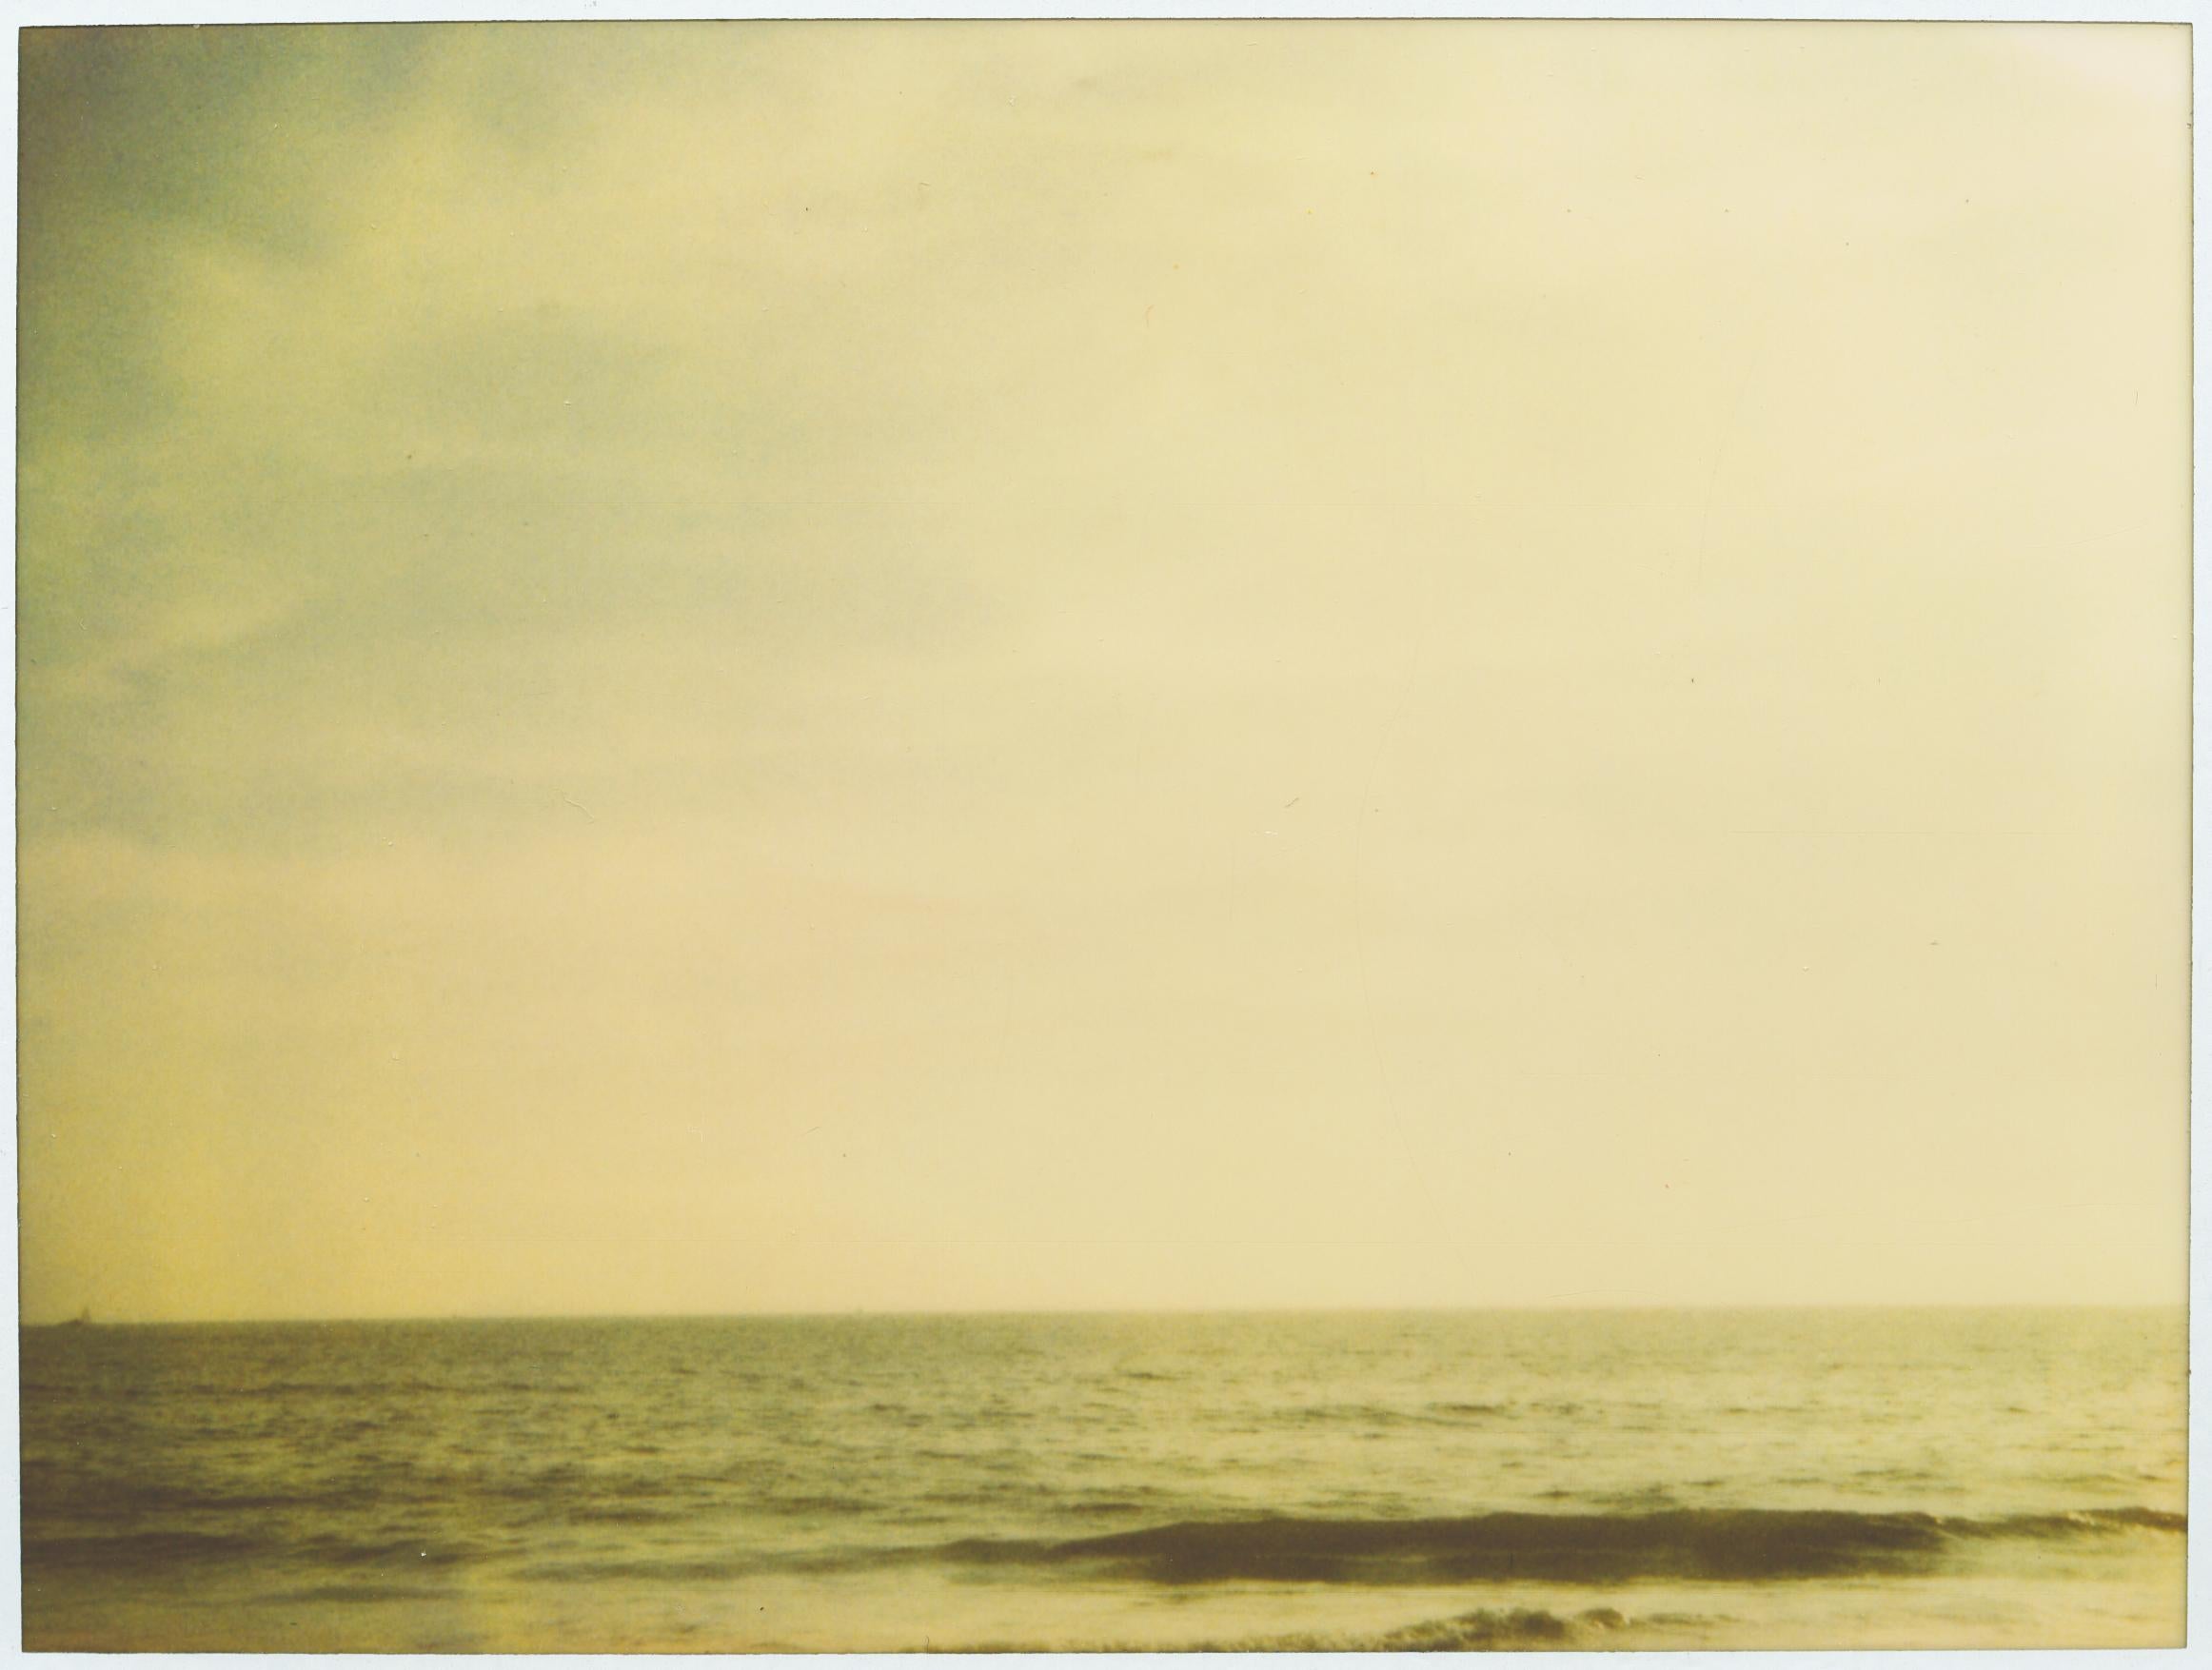 Stefanie Schneider Landscape Photograph - Ocean Blue (Stranger than Paradise), analog, mounted